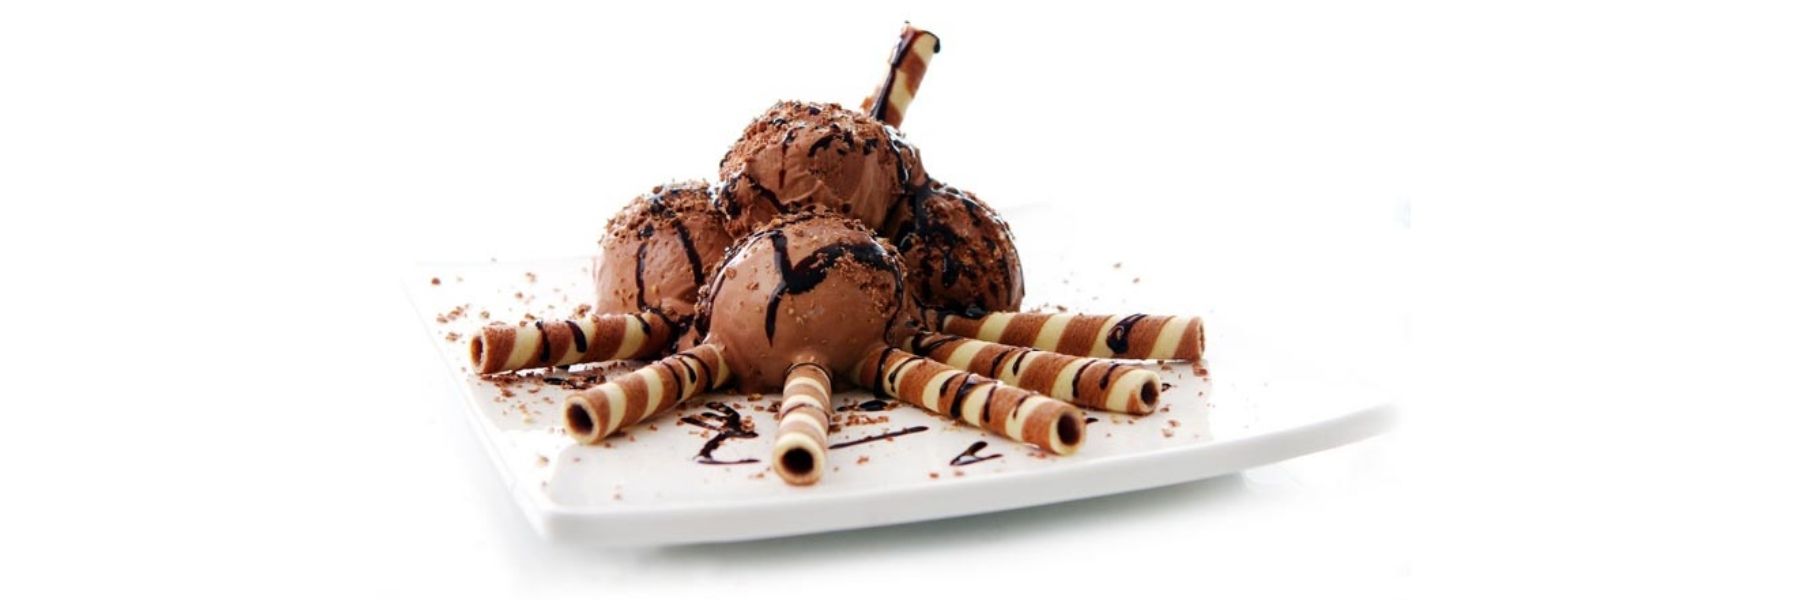 Chocolate Ice-cream with Chocolate Wafers and Sauce